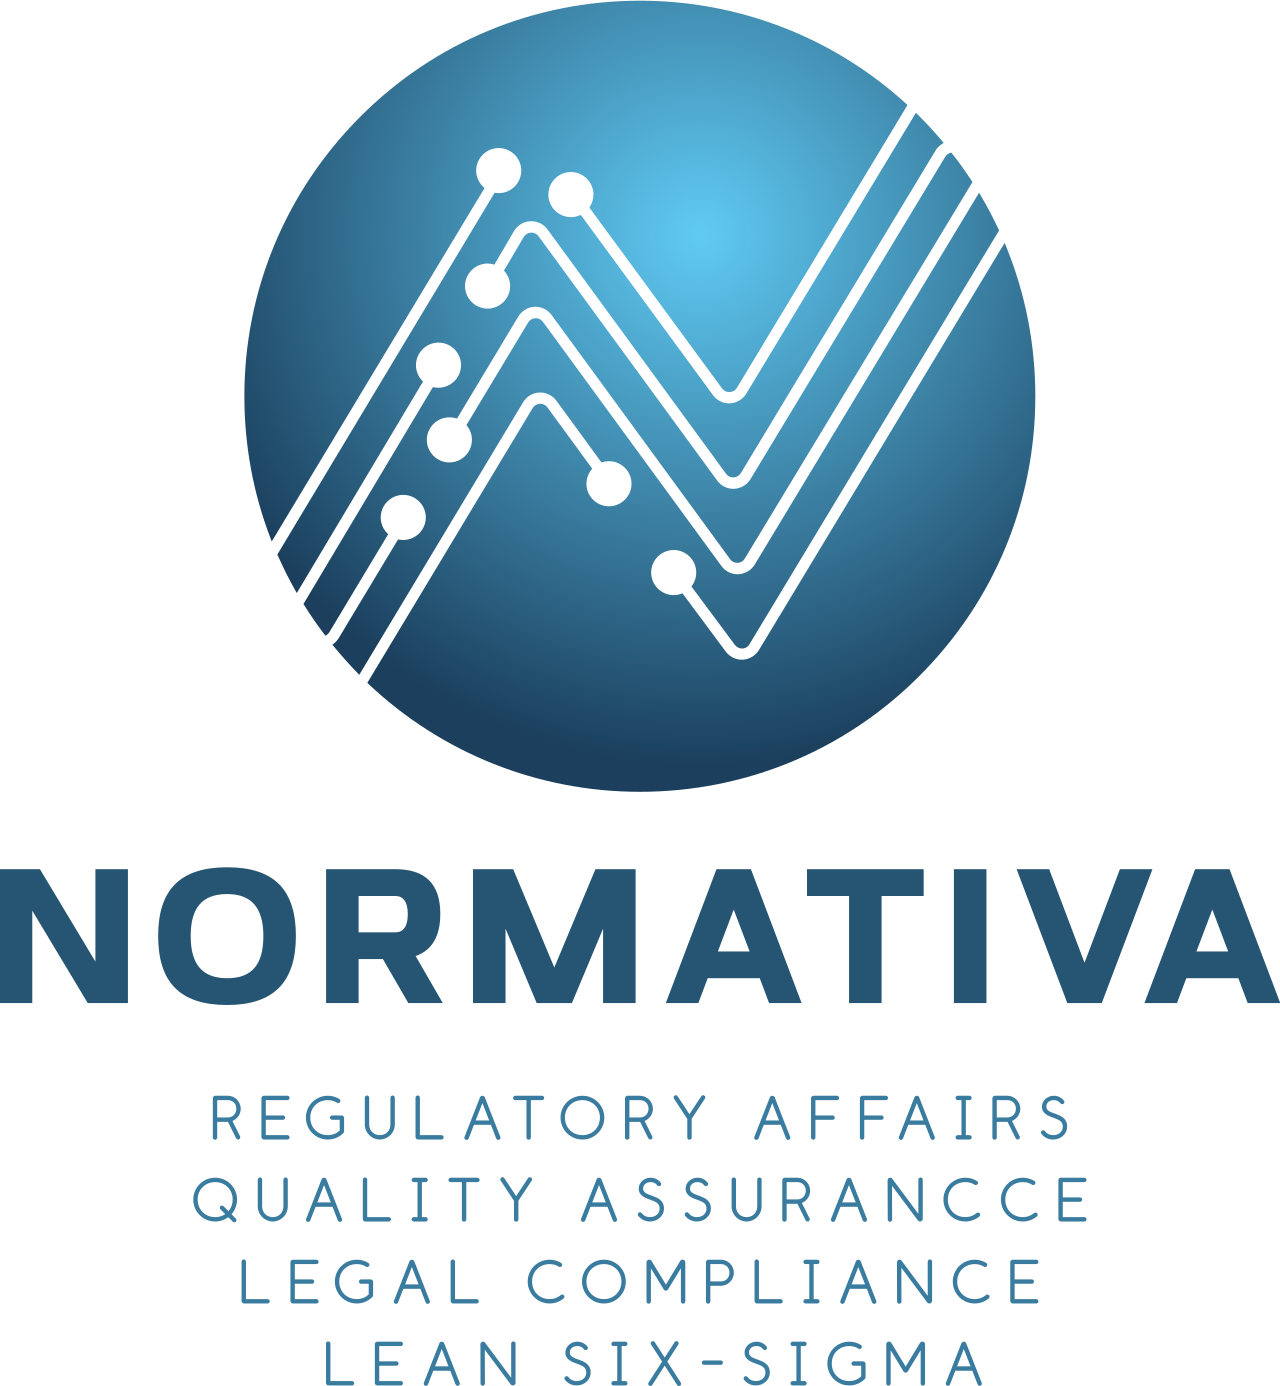 Normativa's logo